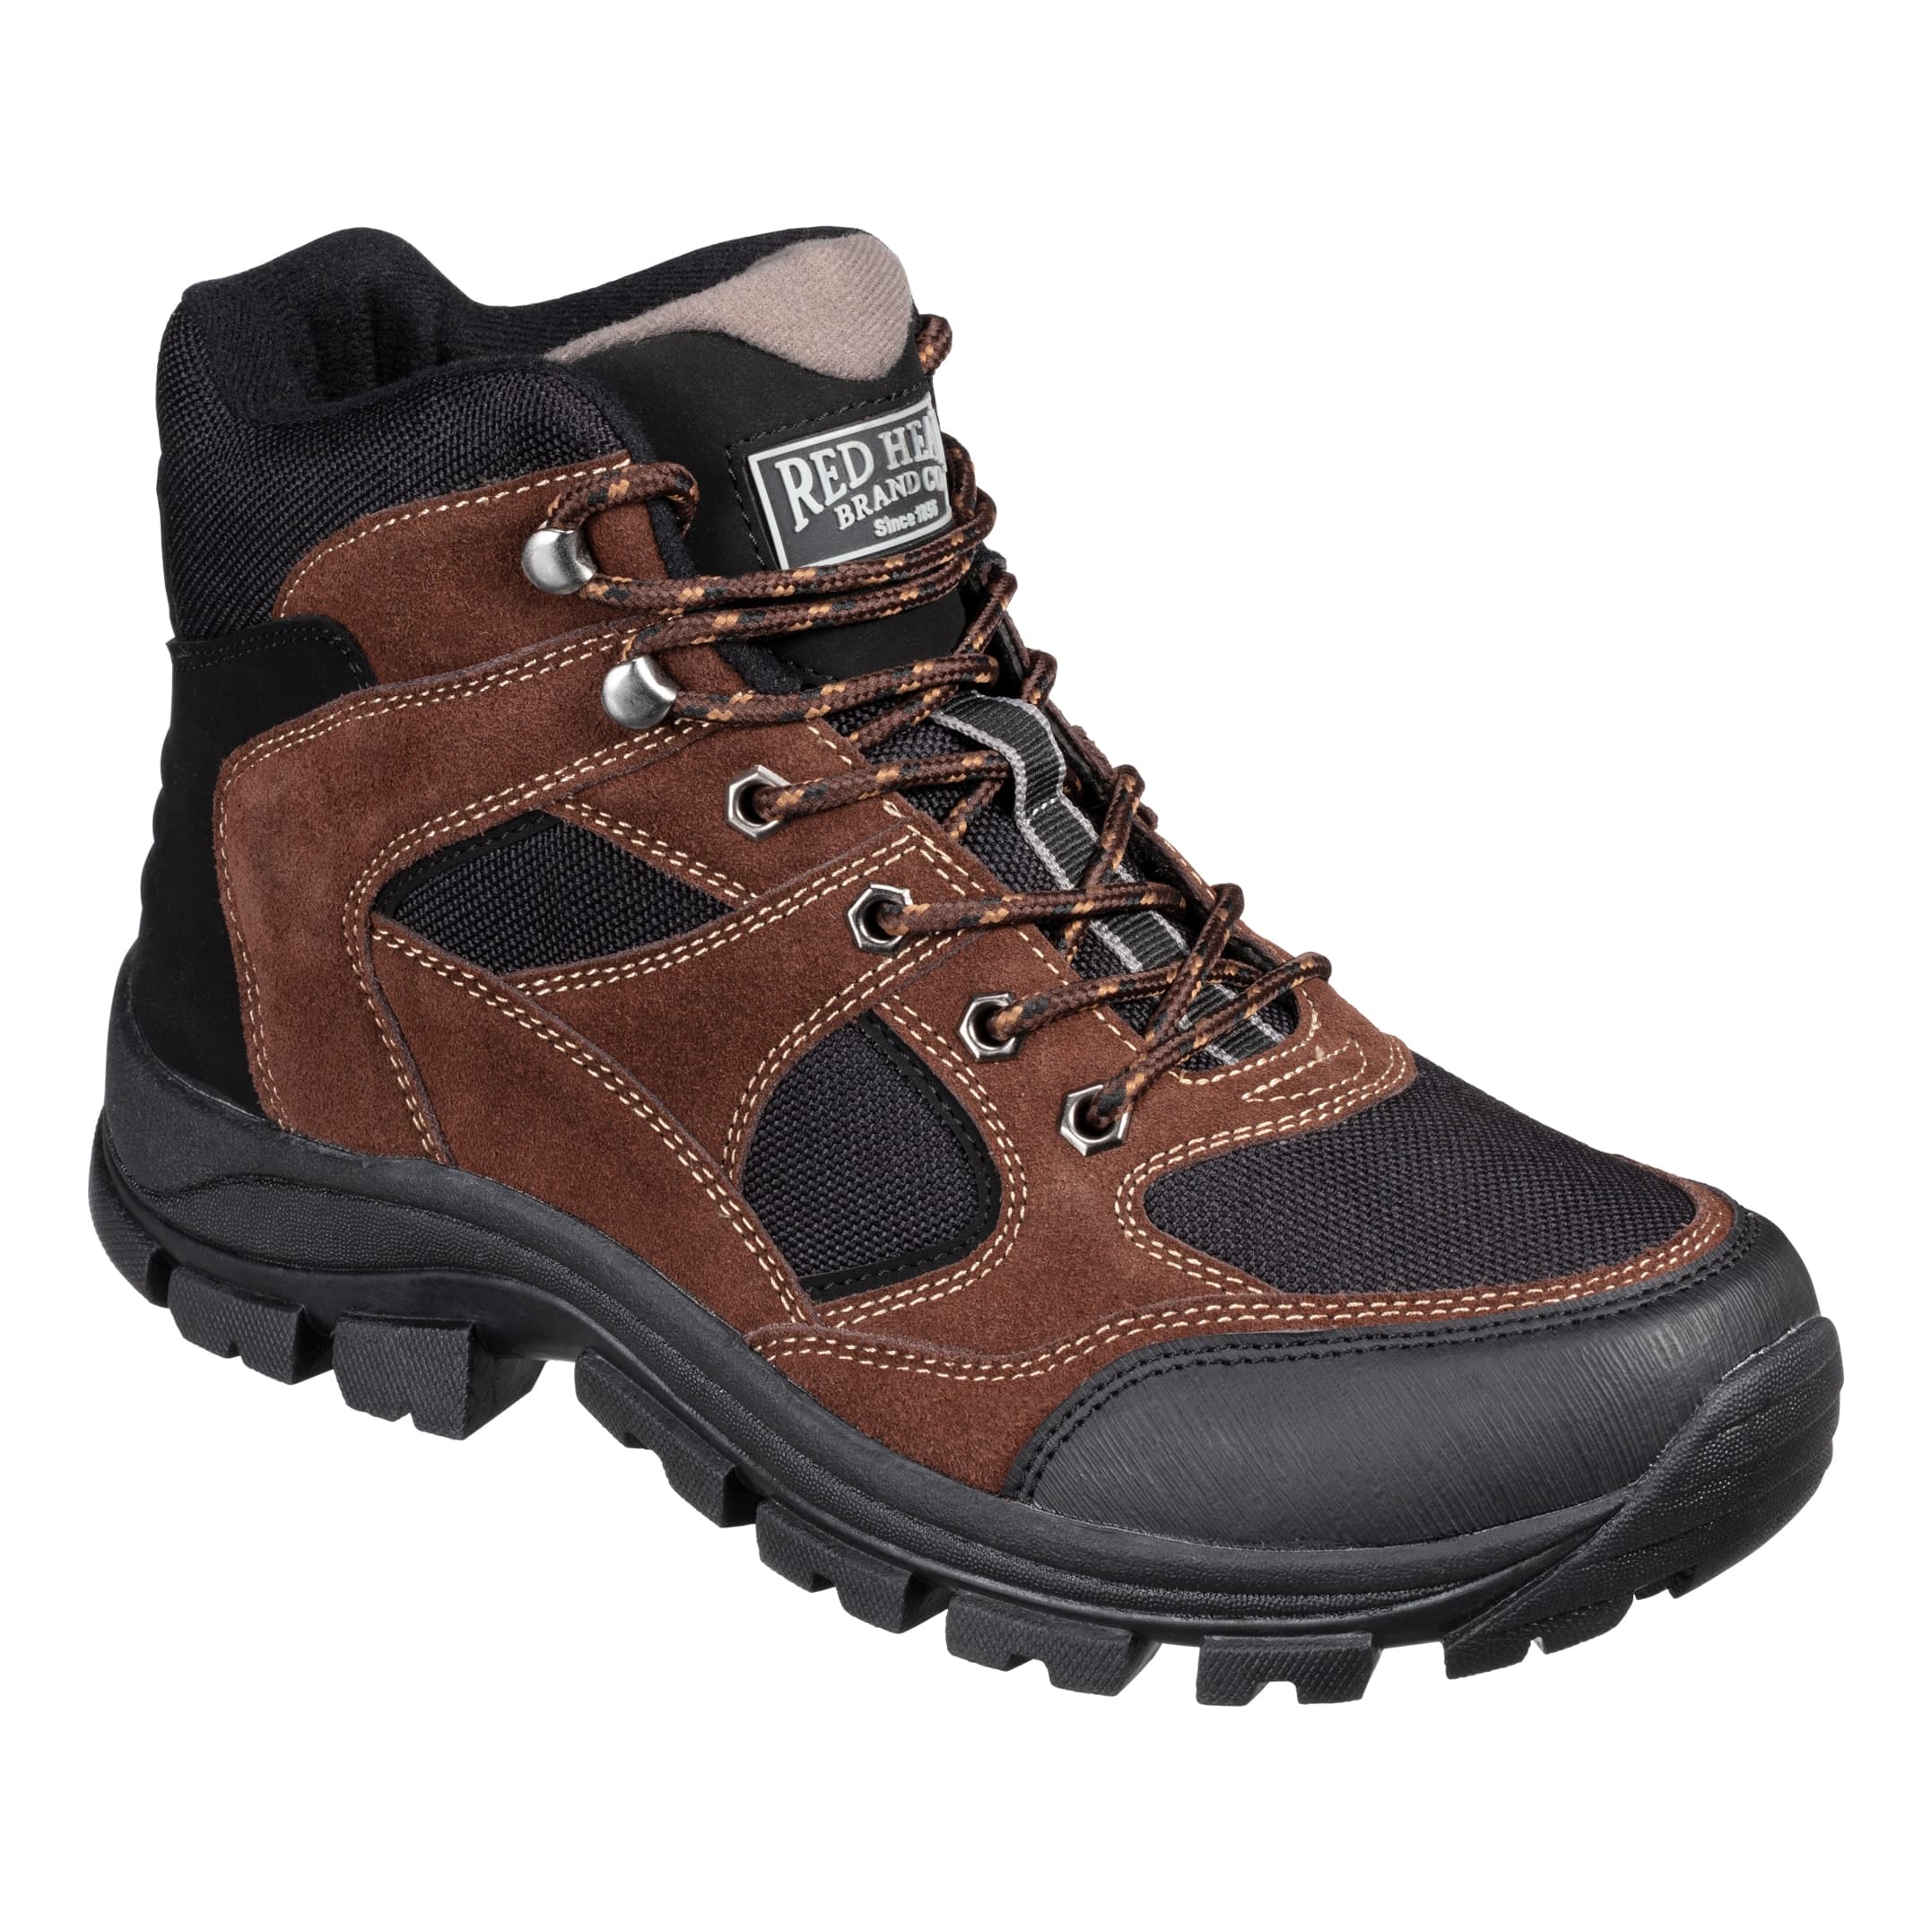 RedHead® Men’s Everest III Hiking Boots